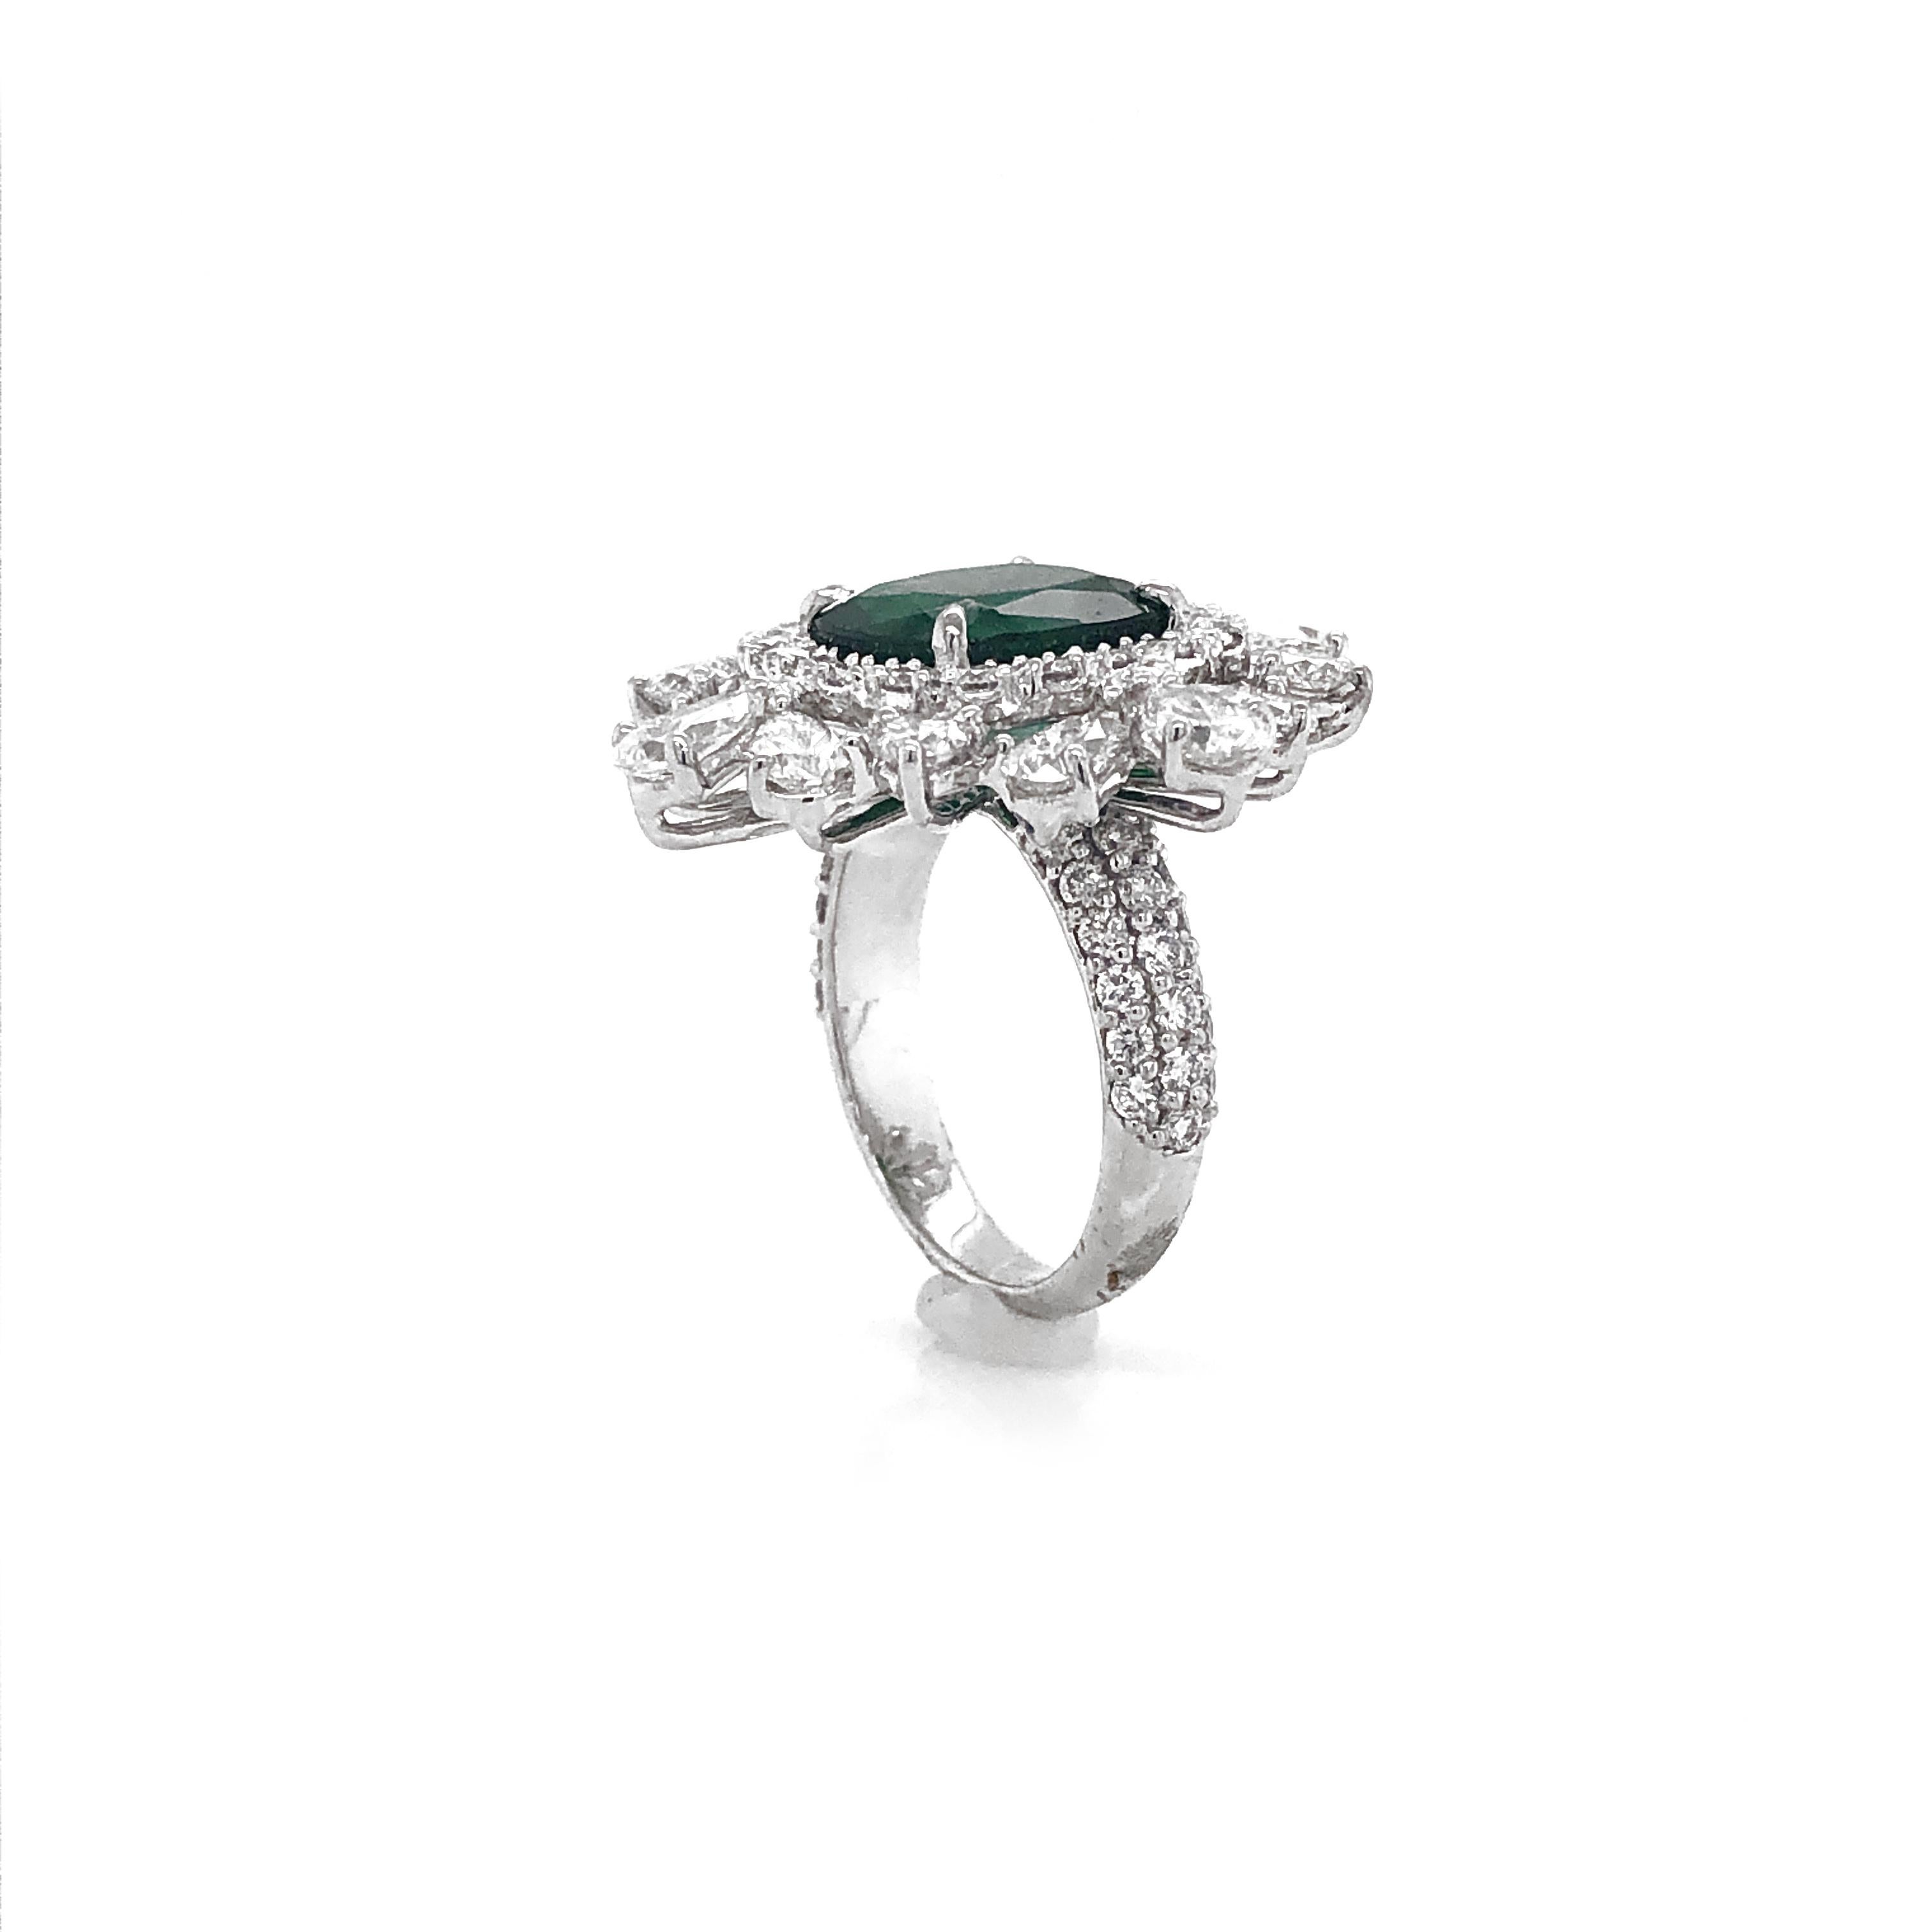 Certified Zambian Cushion Cut Emerald 4.65 Carat Diamond Platinum Cocktail Ring For Sale 4